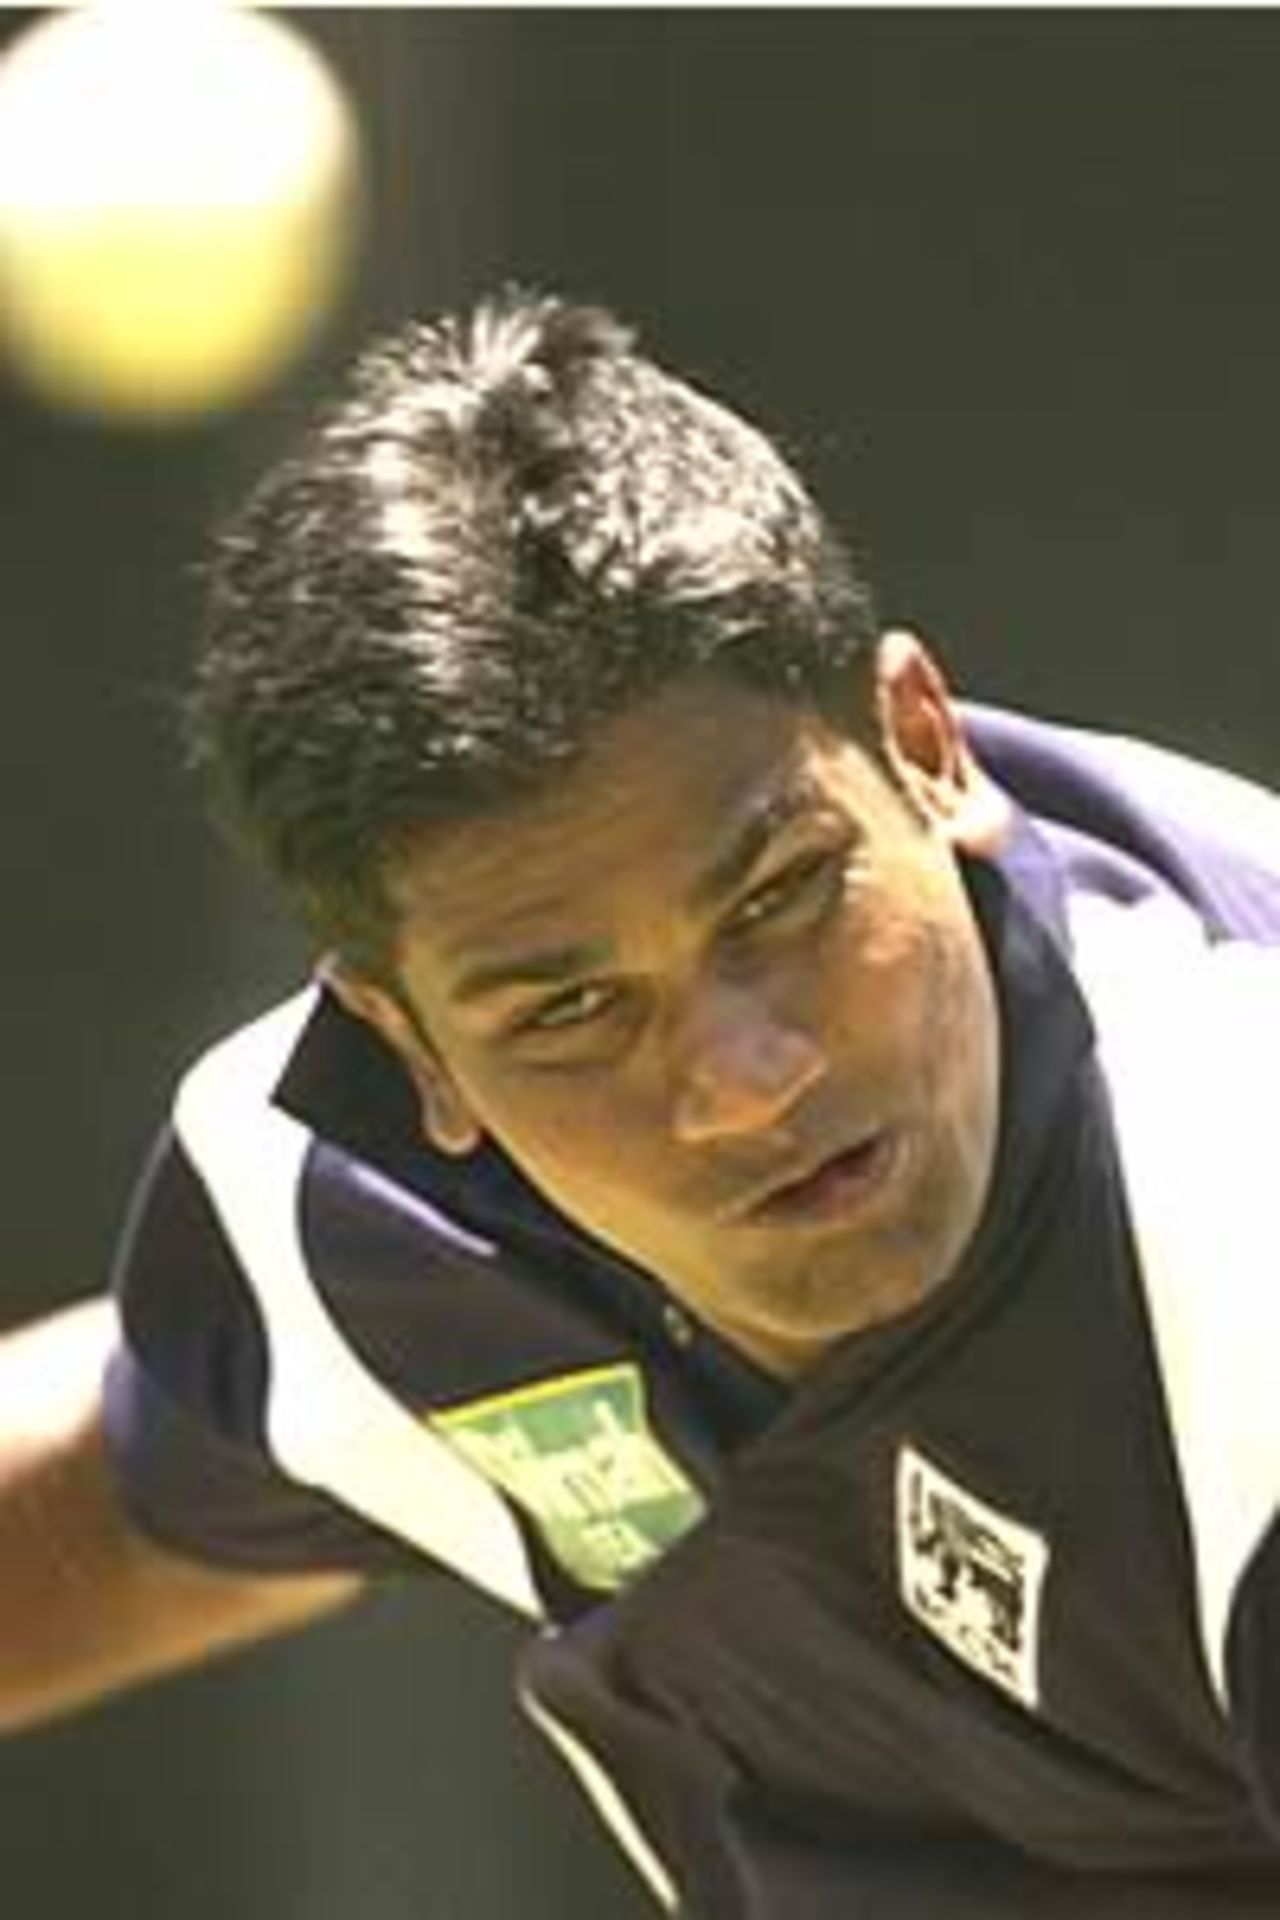 BRISBANE - DECEMBER 16: Nuwan Zoysa bowls in the nets during a Sri Lankan cricket team training session at the Gabba in Brisbane, Australia on December 16, 2002